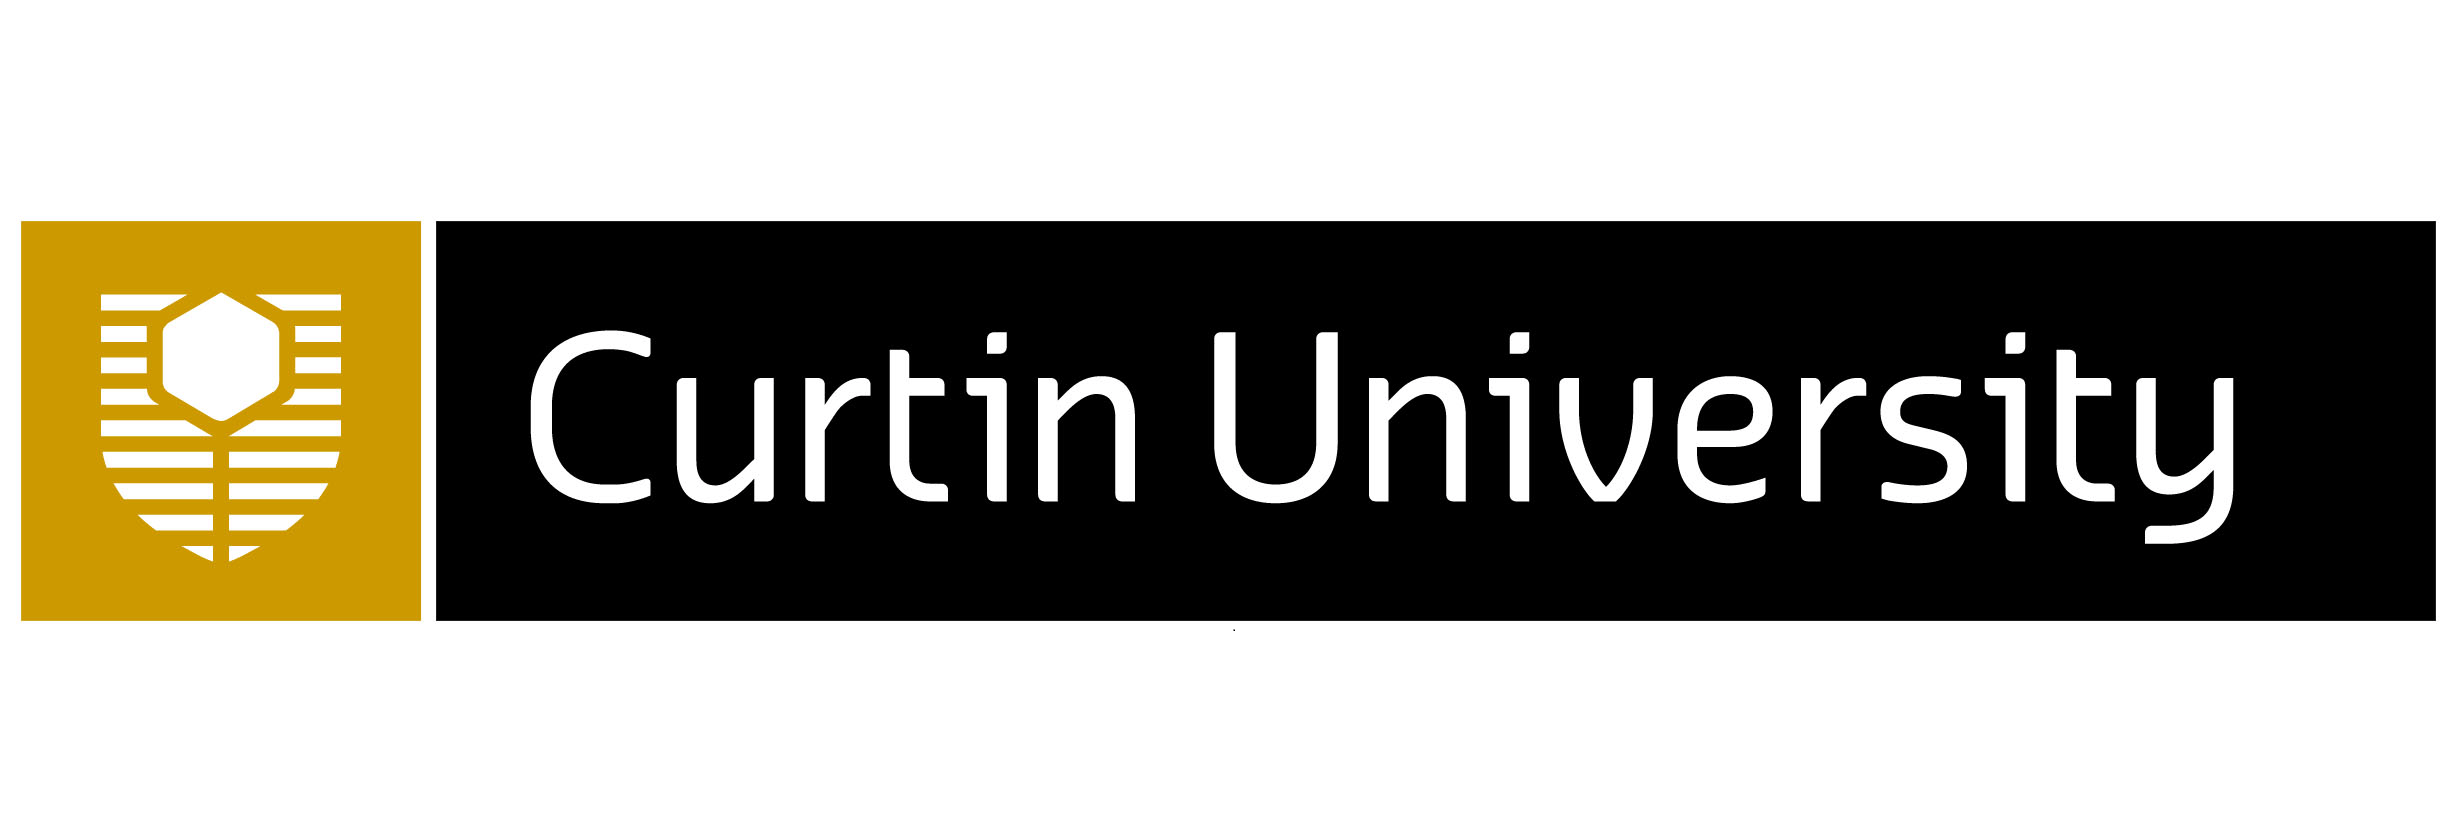 Bachelor of Arts (Mass Communication) | Bachelor's degree | Media & Communications | On Campus | 3 to 5 years | Curtin University | Australia